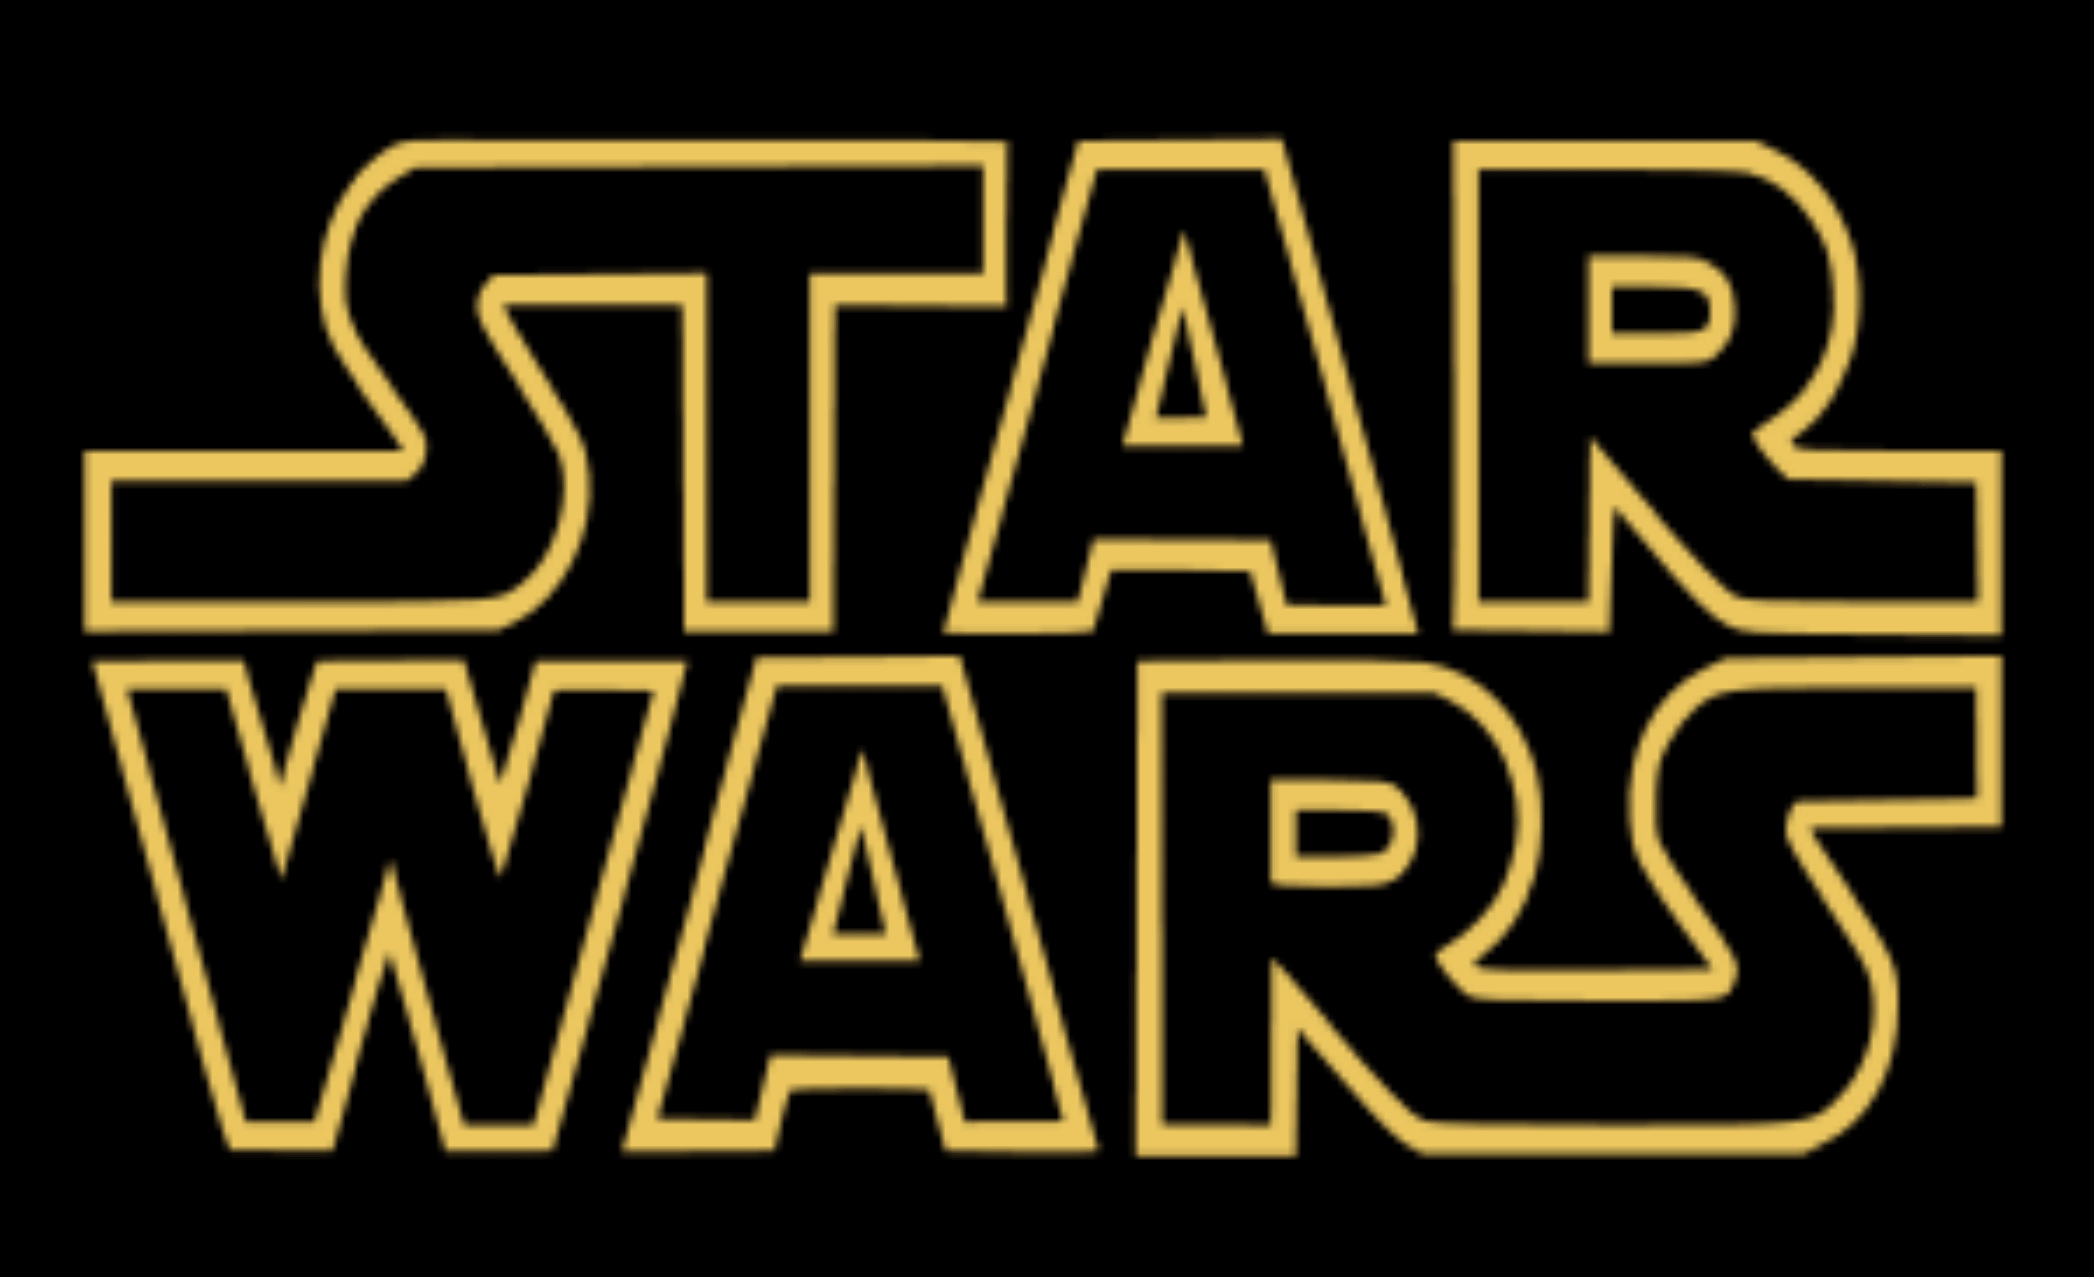 Star wars movie title clipart